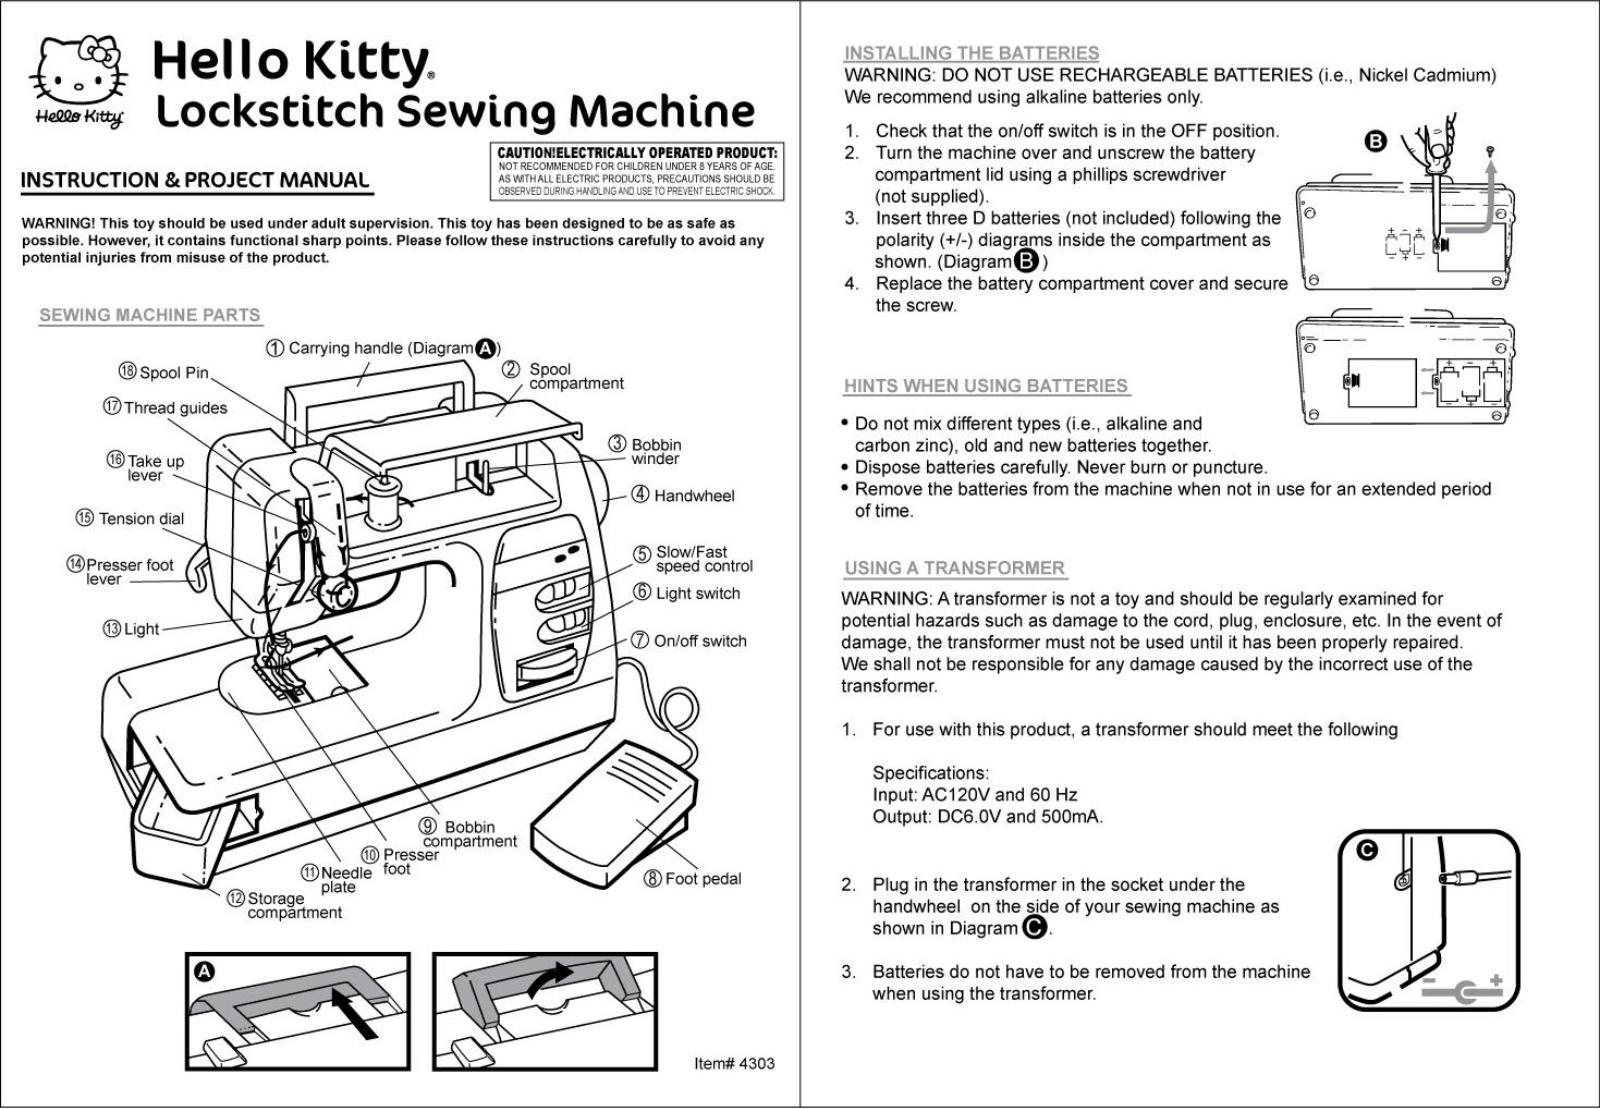 JANOME Hello Kitty 11706 User Manual